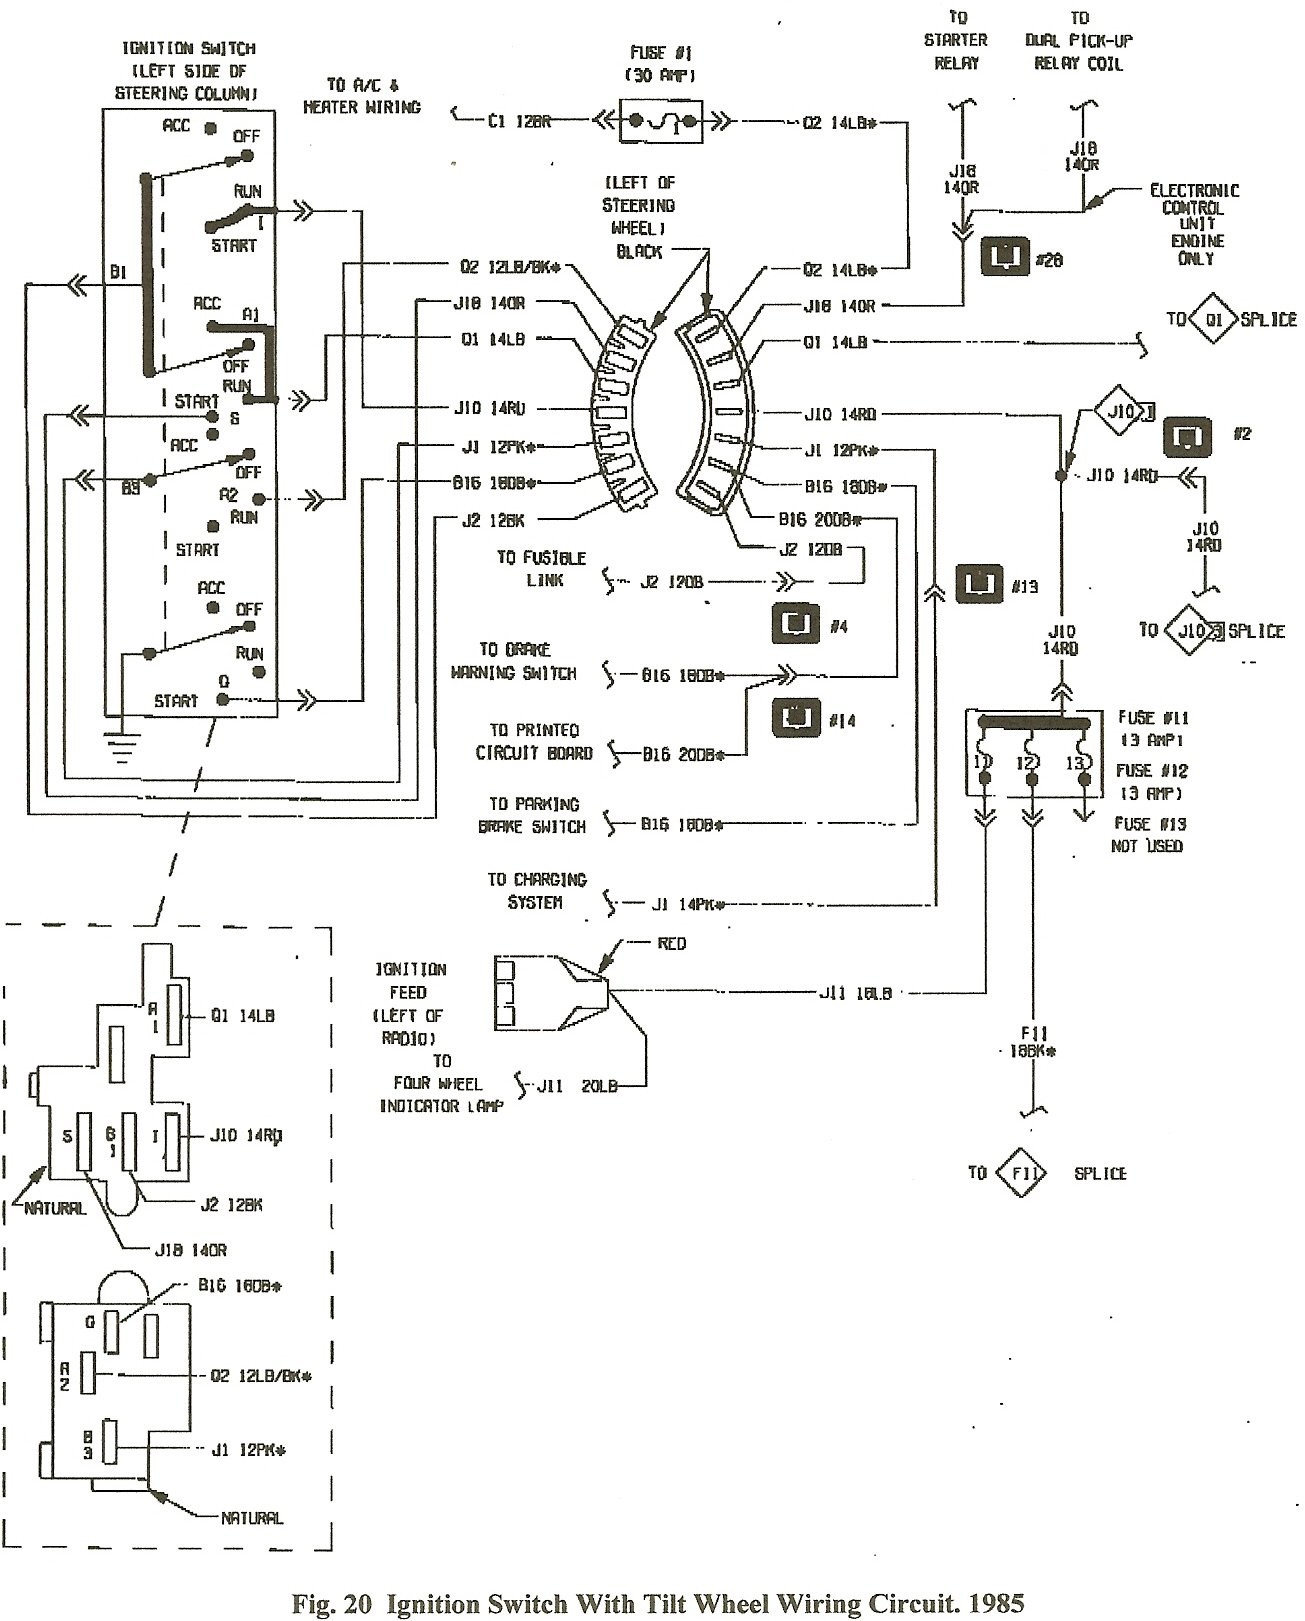 1992 Dodge Ram Wiring Diagram from detoxicrecenze.com